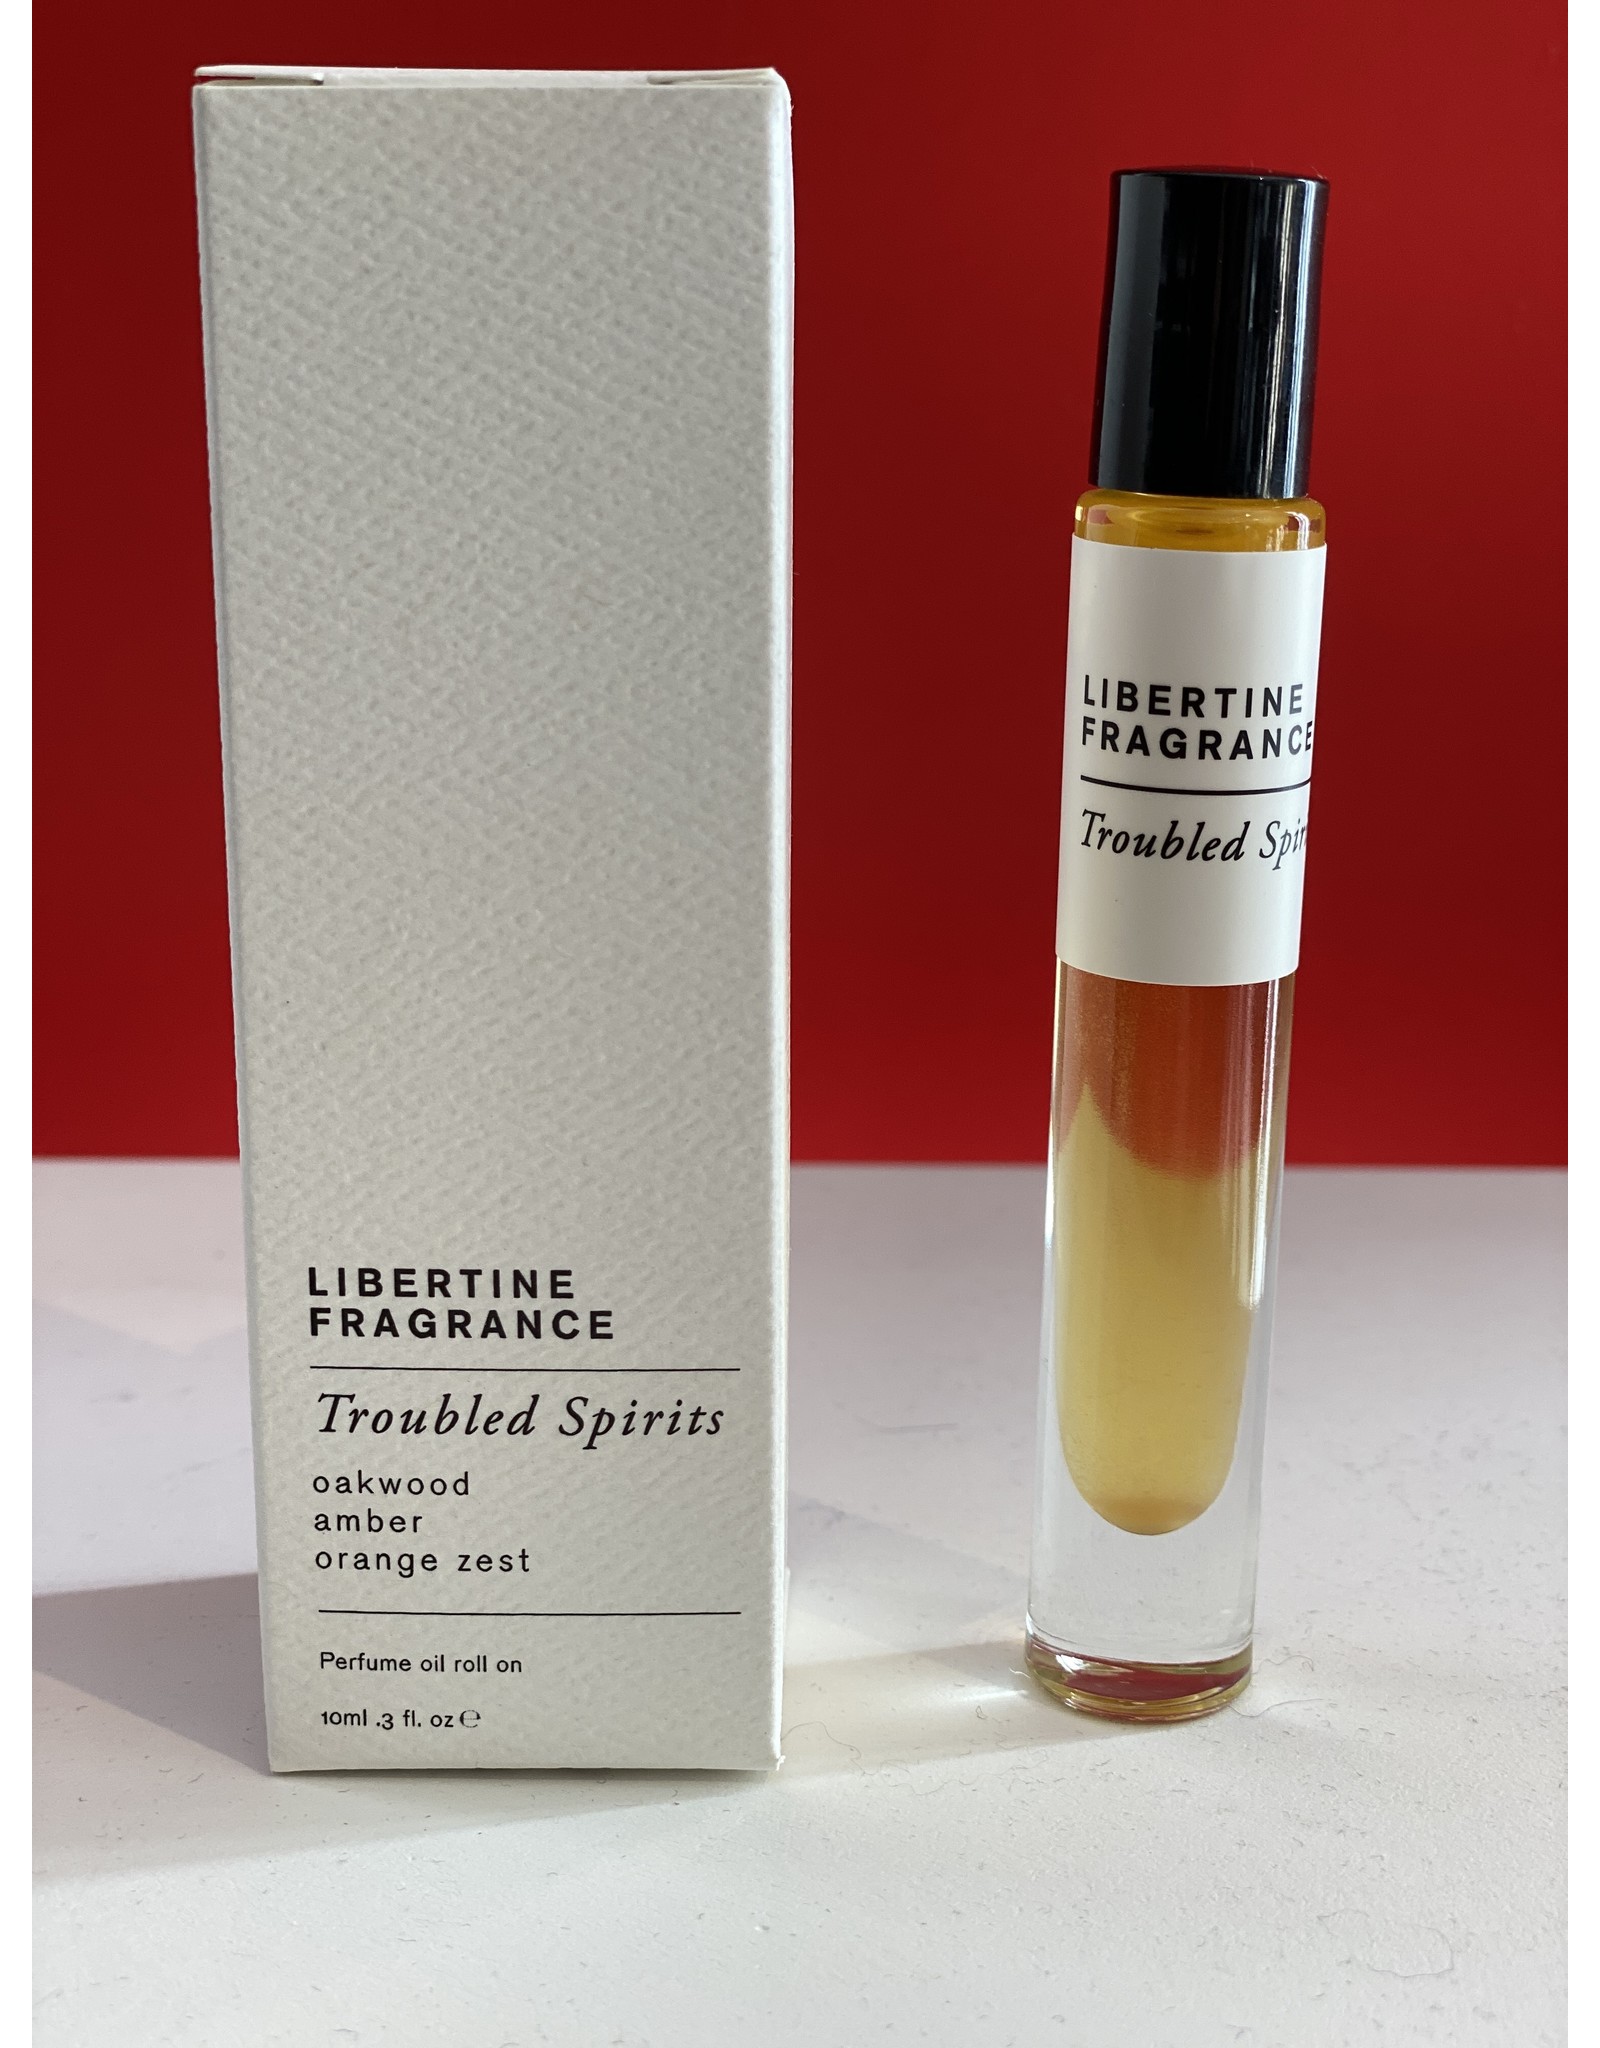 Libertine Fragrance Troubled Spirits Perfume Oil